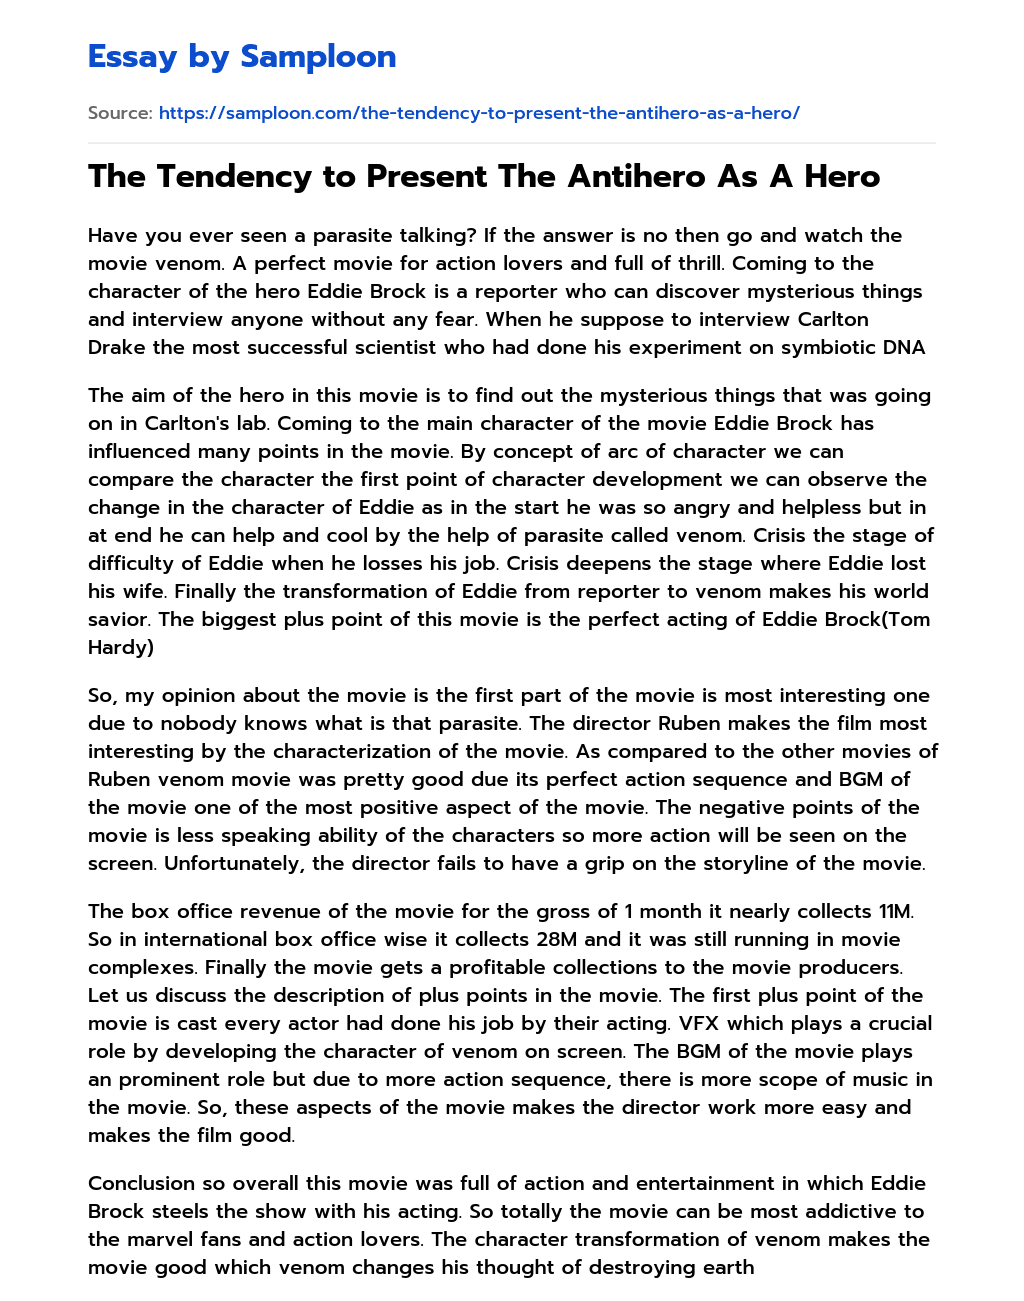 The Tendency to Present The Antihero As A Hero essay